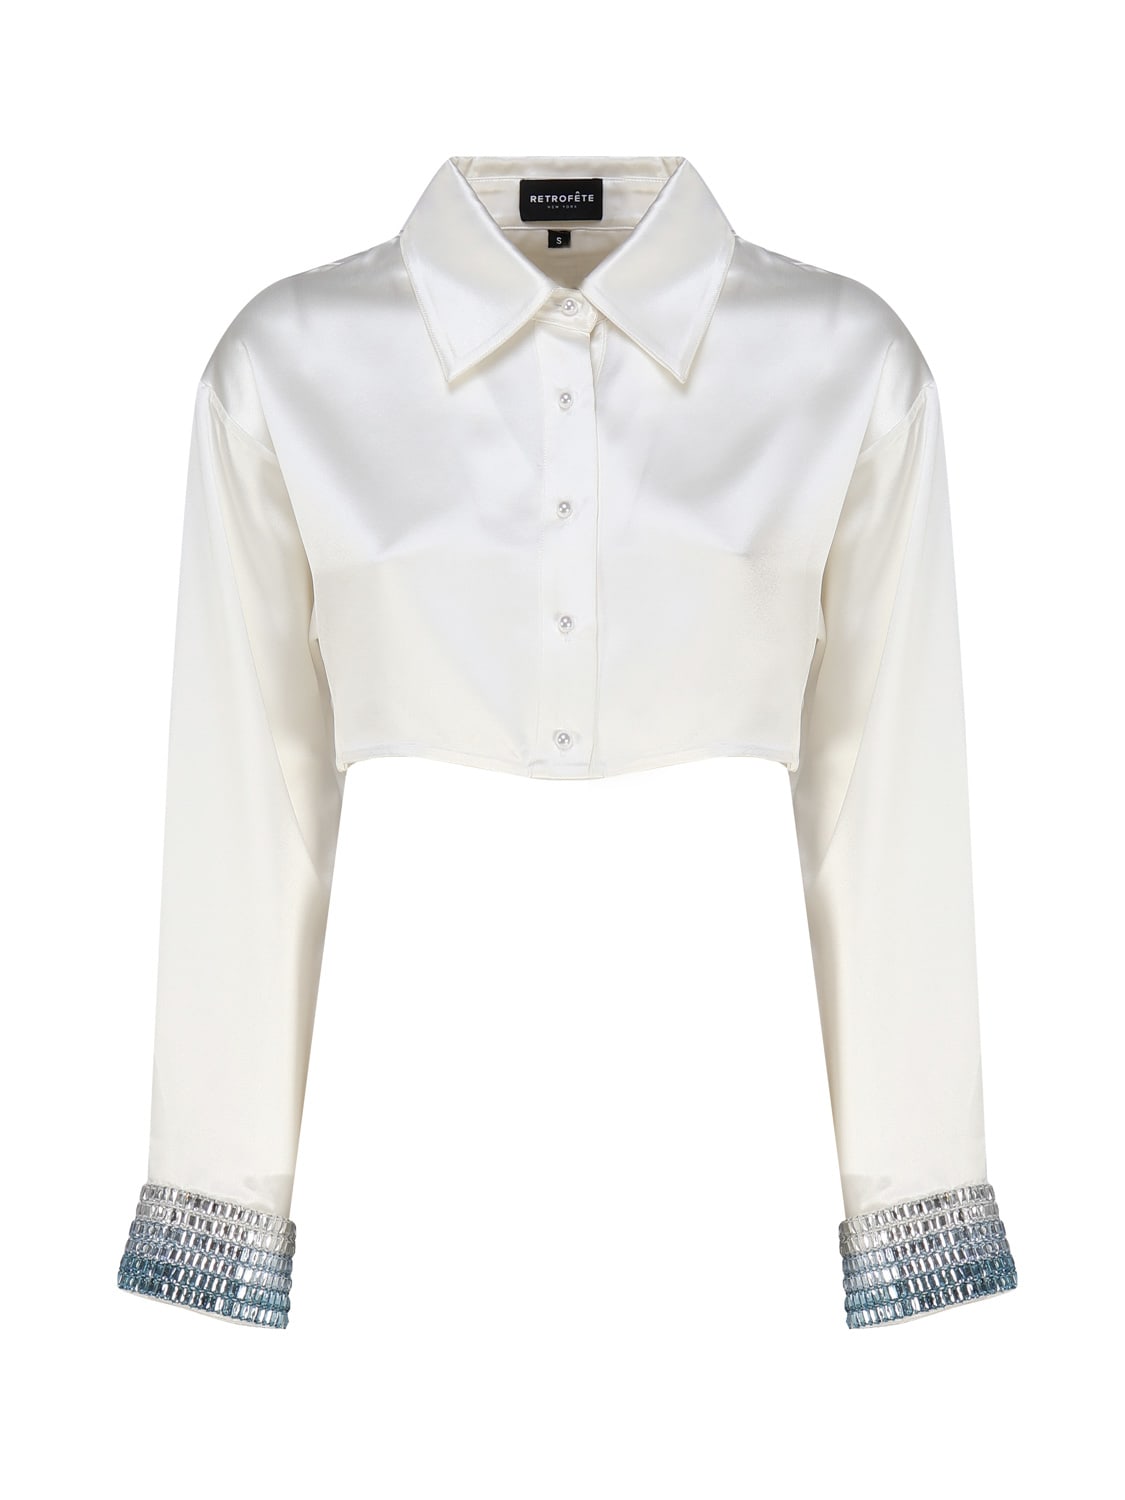 Retroféte Cartola Shirt In White